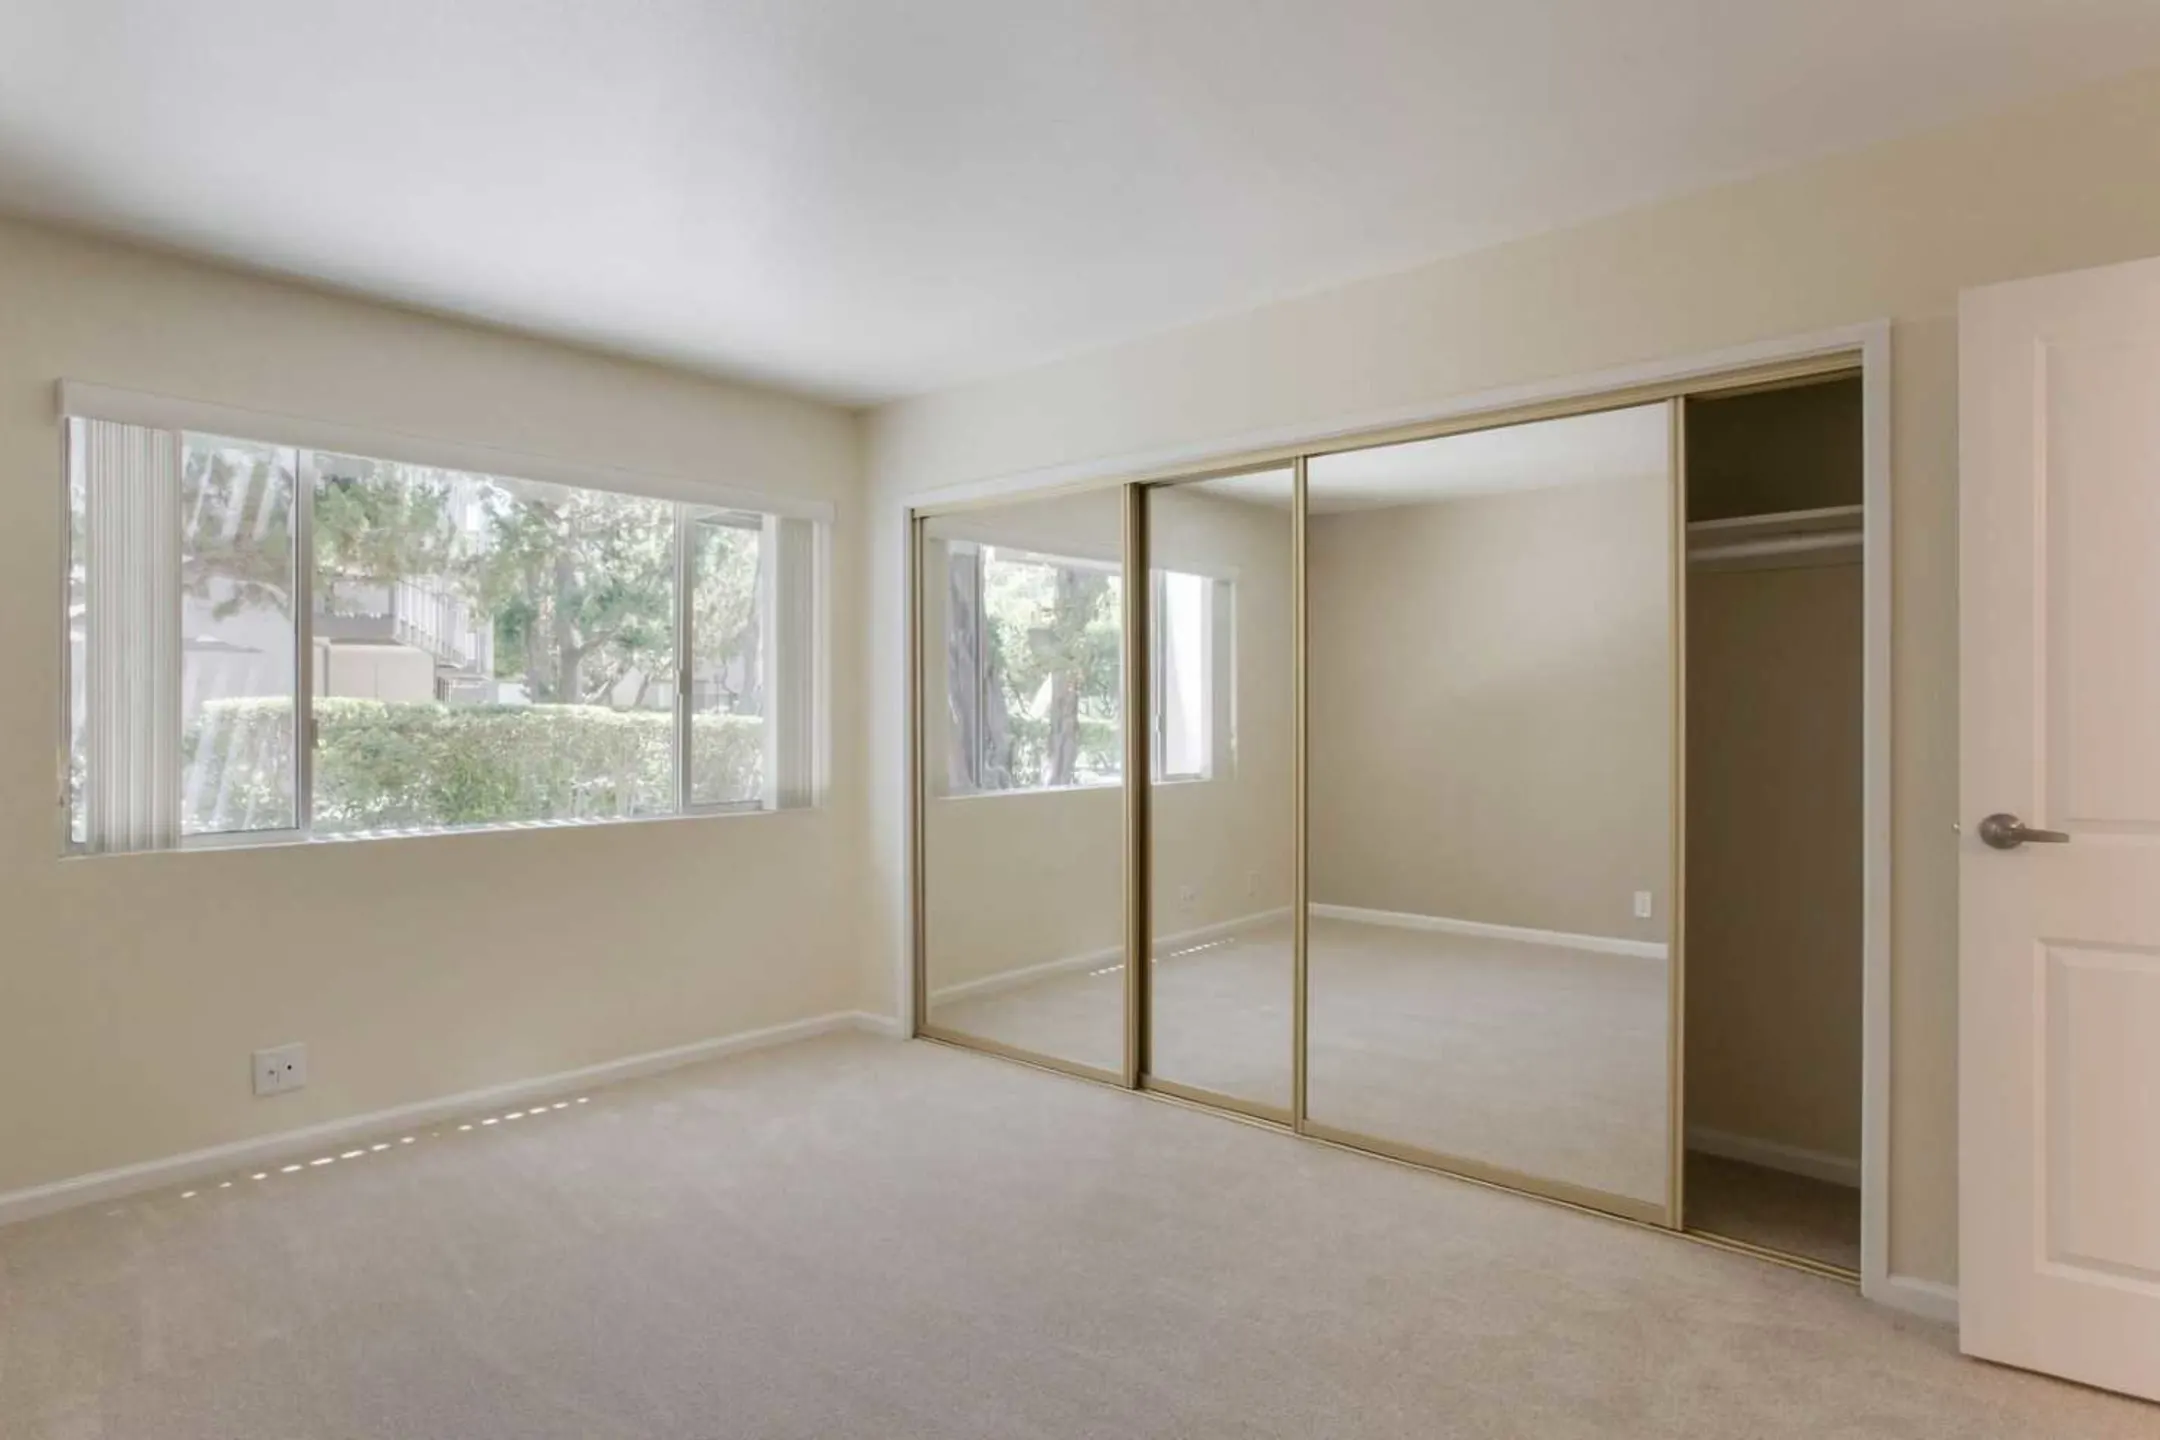 Bedroom - Parksquare Apartments - Palo Alto, CA